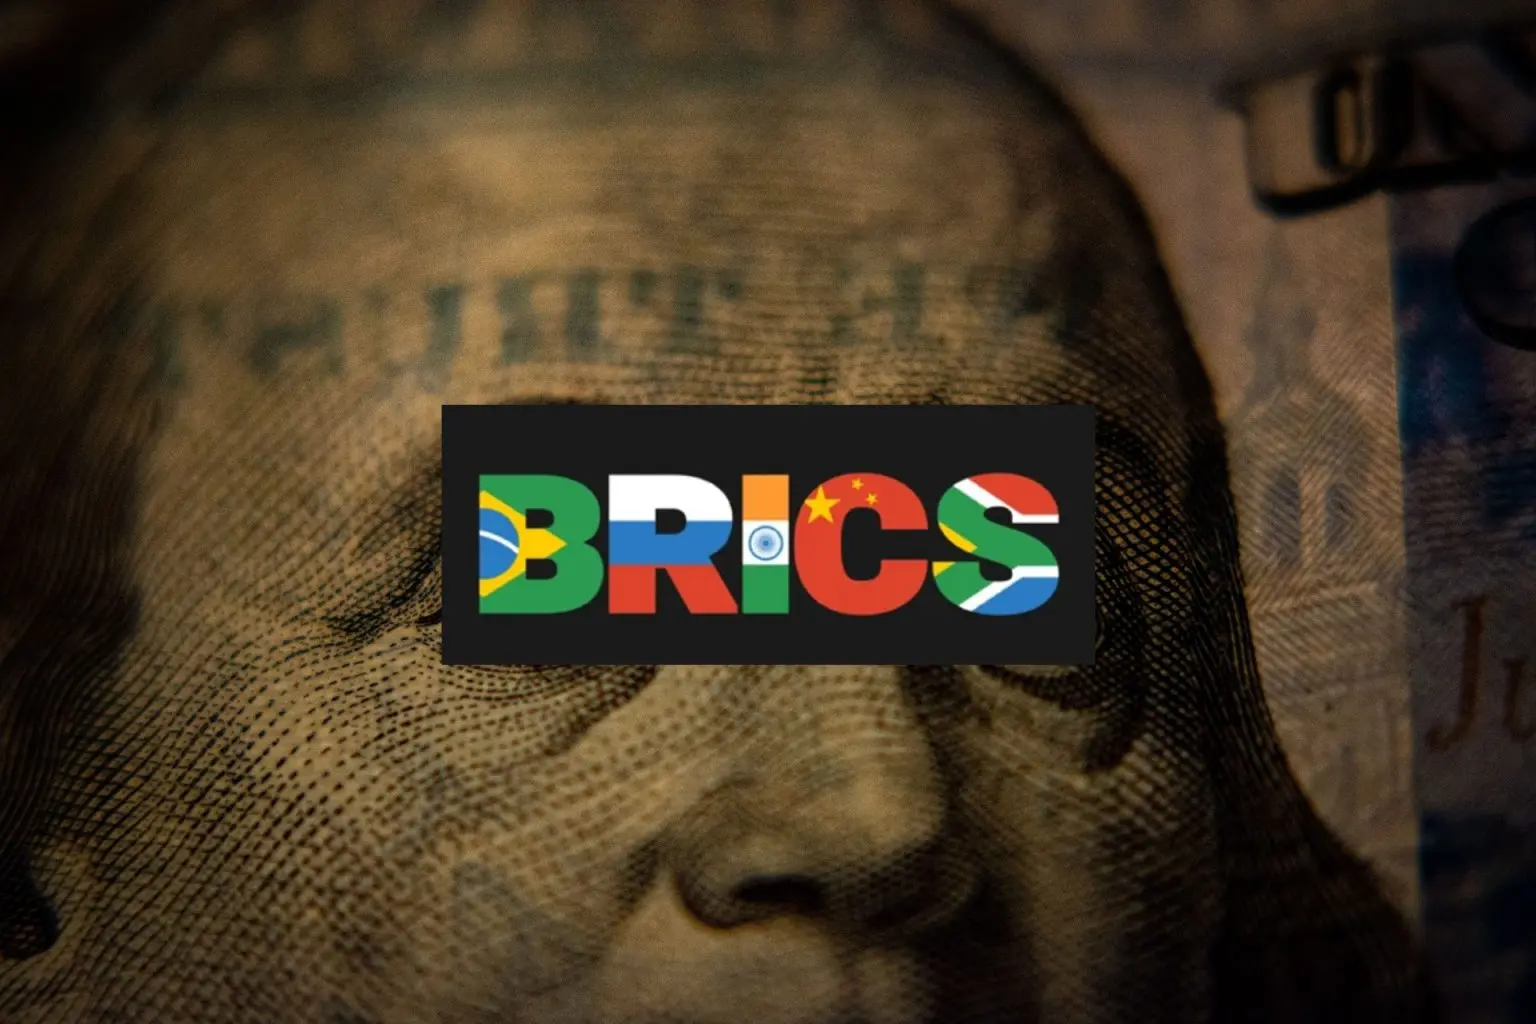 brics-us-dollar-bill-1536x1024.jpg.webp